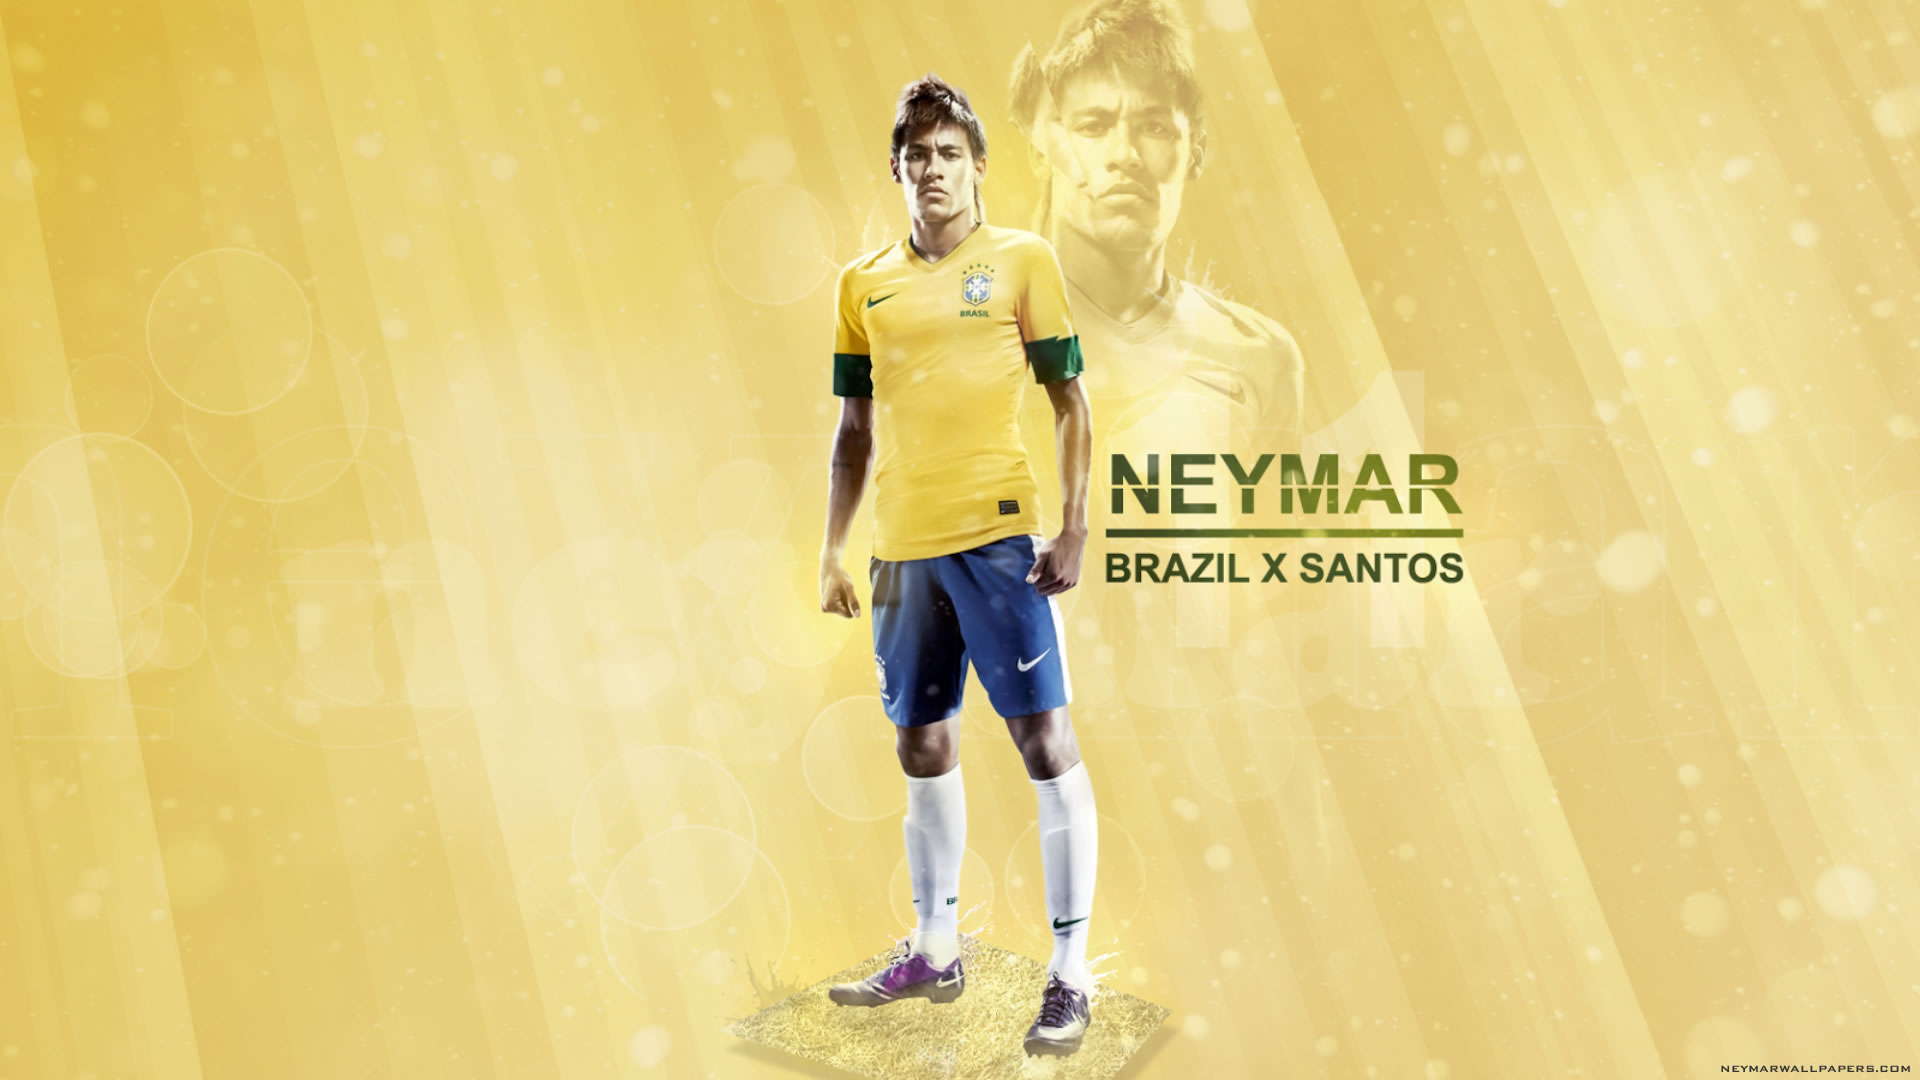 Neymar Brazil wallpaper (6)